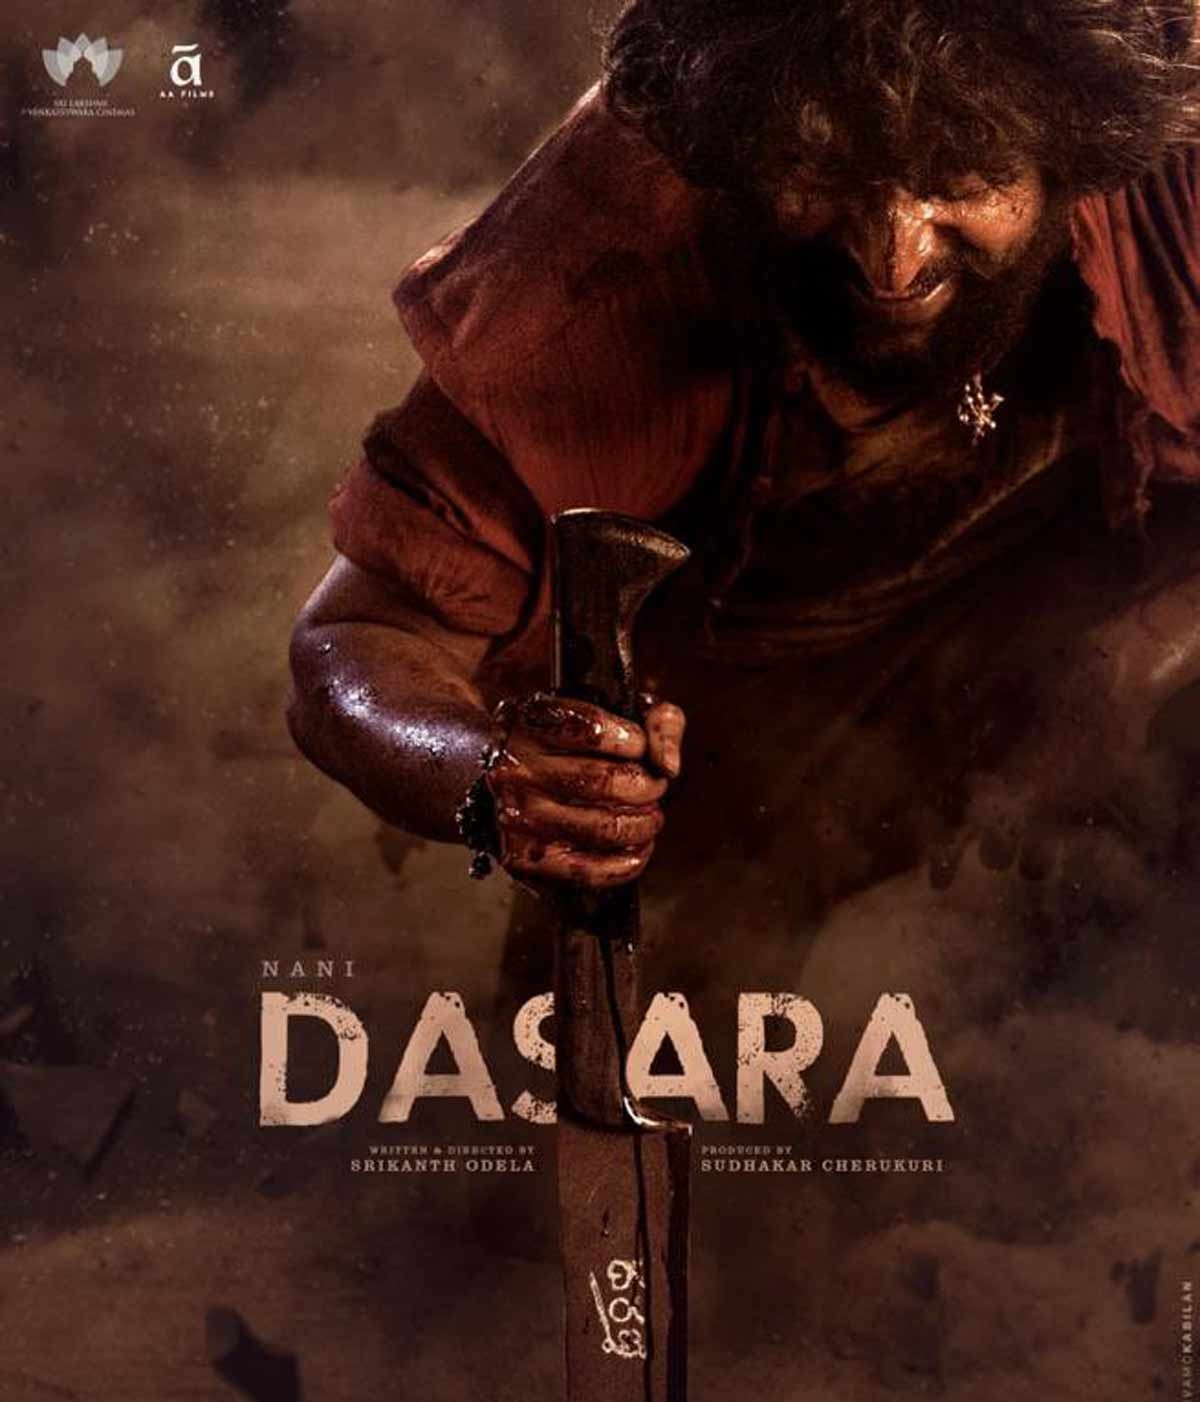 Dasara Movie Review